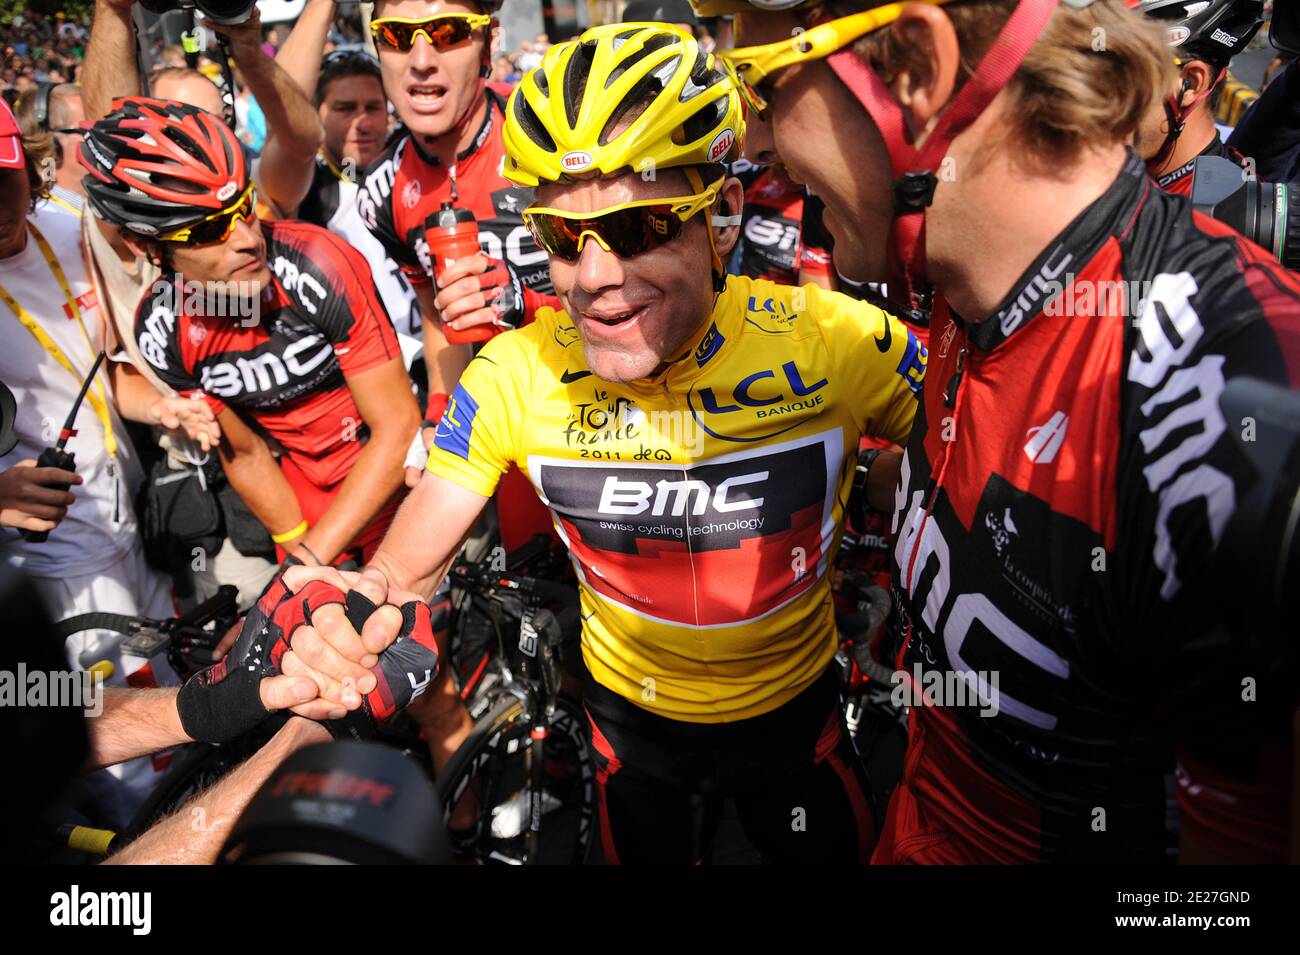 ustralia's Cadel Evans celebrates winning the Tour de France following the stage twenty one of the Tour de France from Creteil to Paris, France on July 24, 2011. Photo by Giancarlo Gorassini/ABACAPRESS.COM Stock Photo